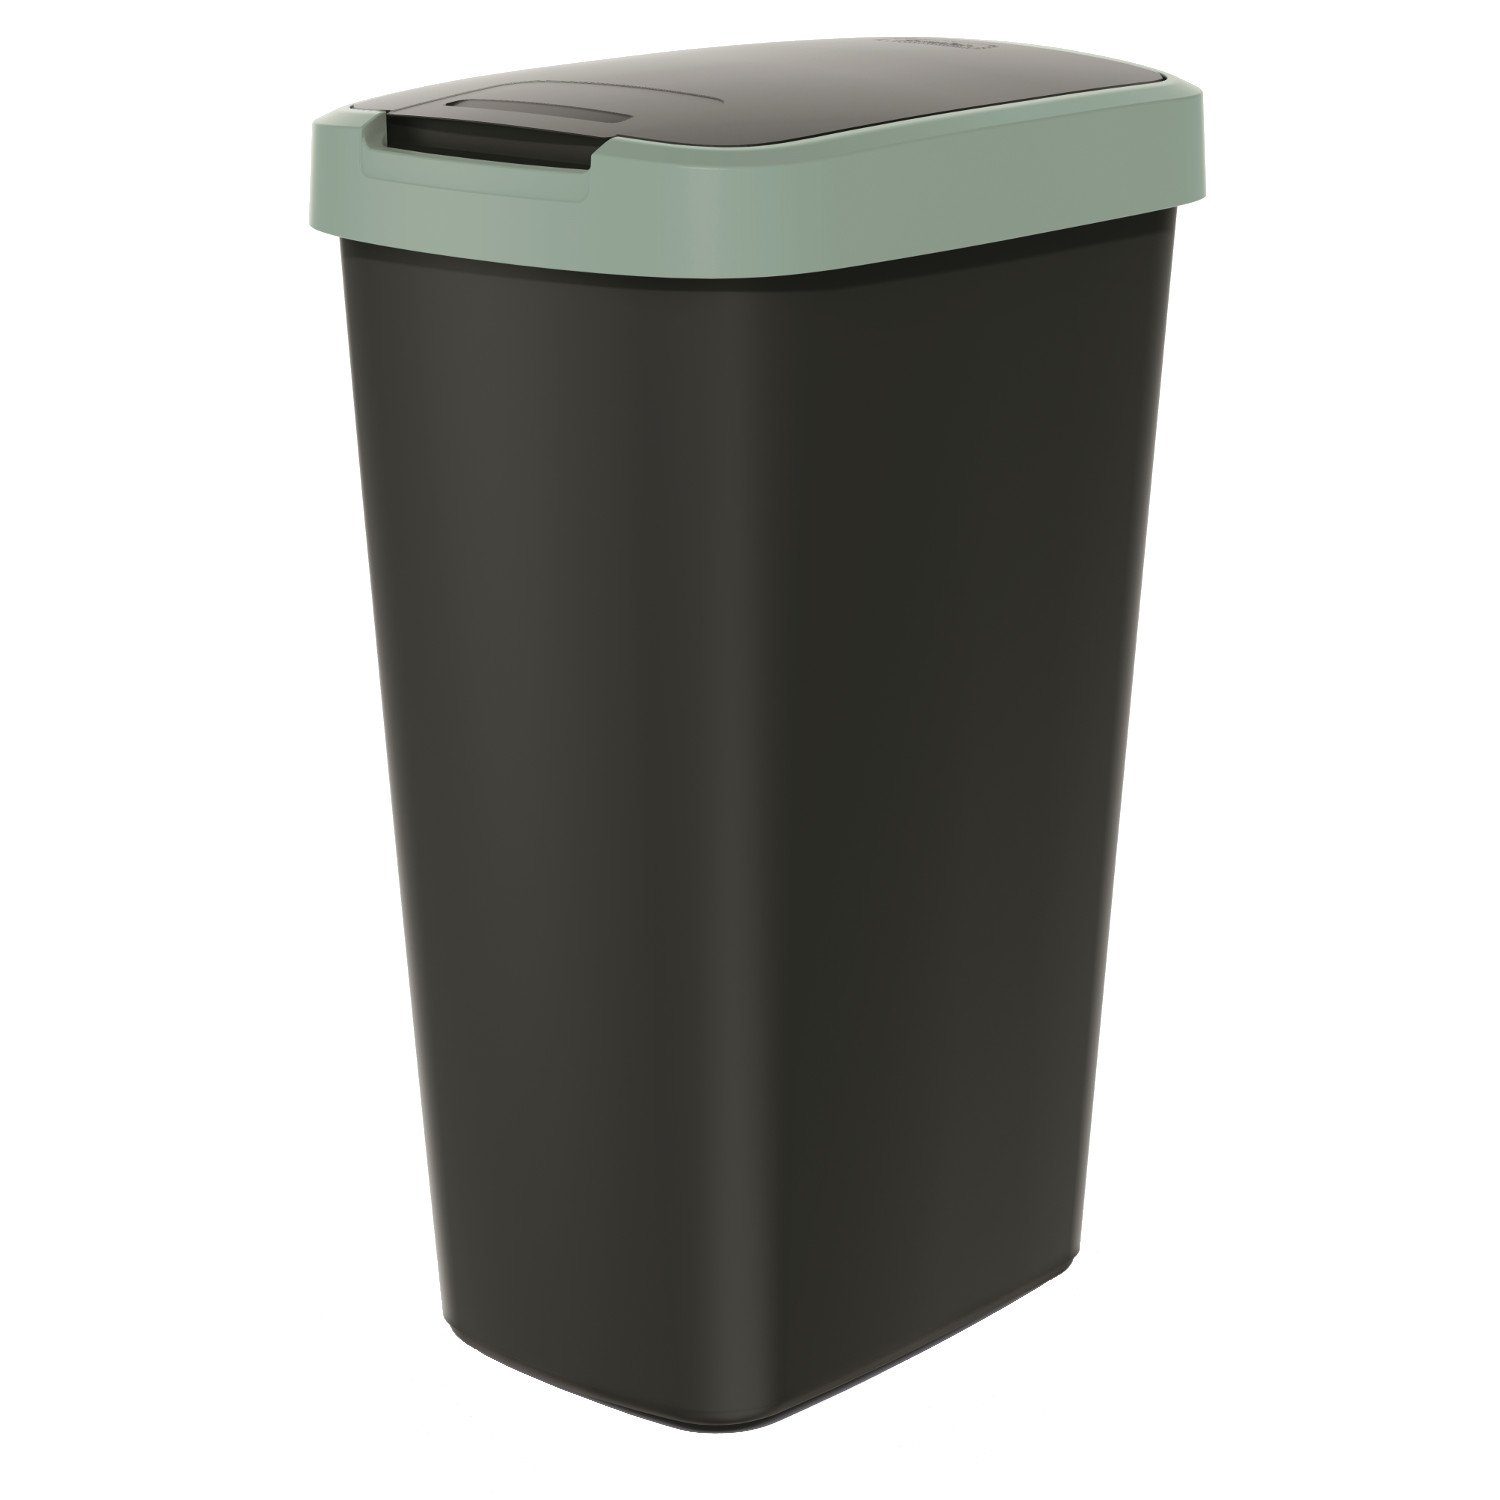 Keden Mülleimer Compacta Q, Abfallbehälter 45l mit Deckel KEDEN COMPACTA Q Grün